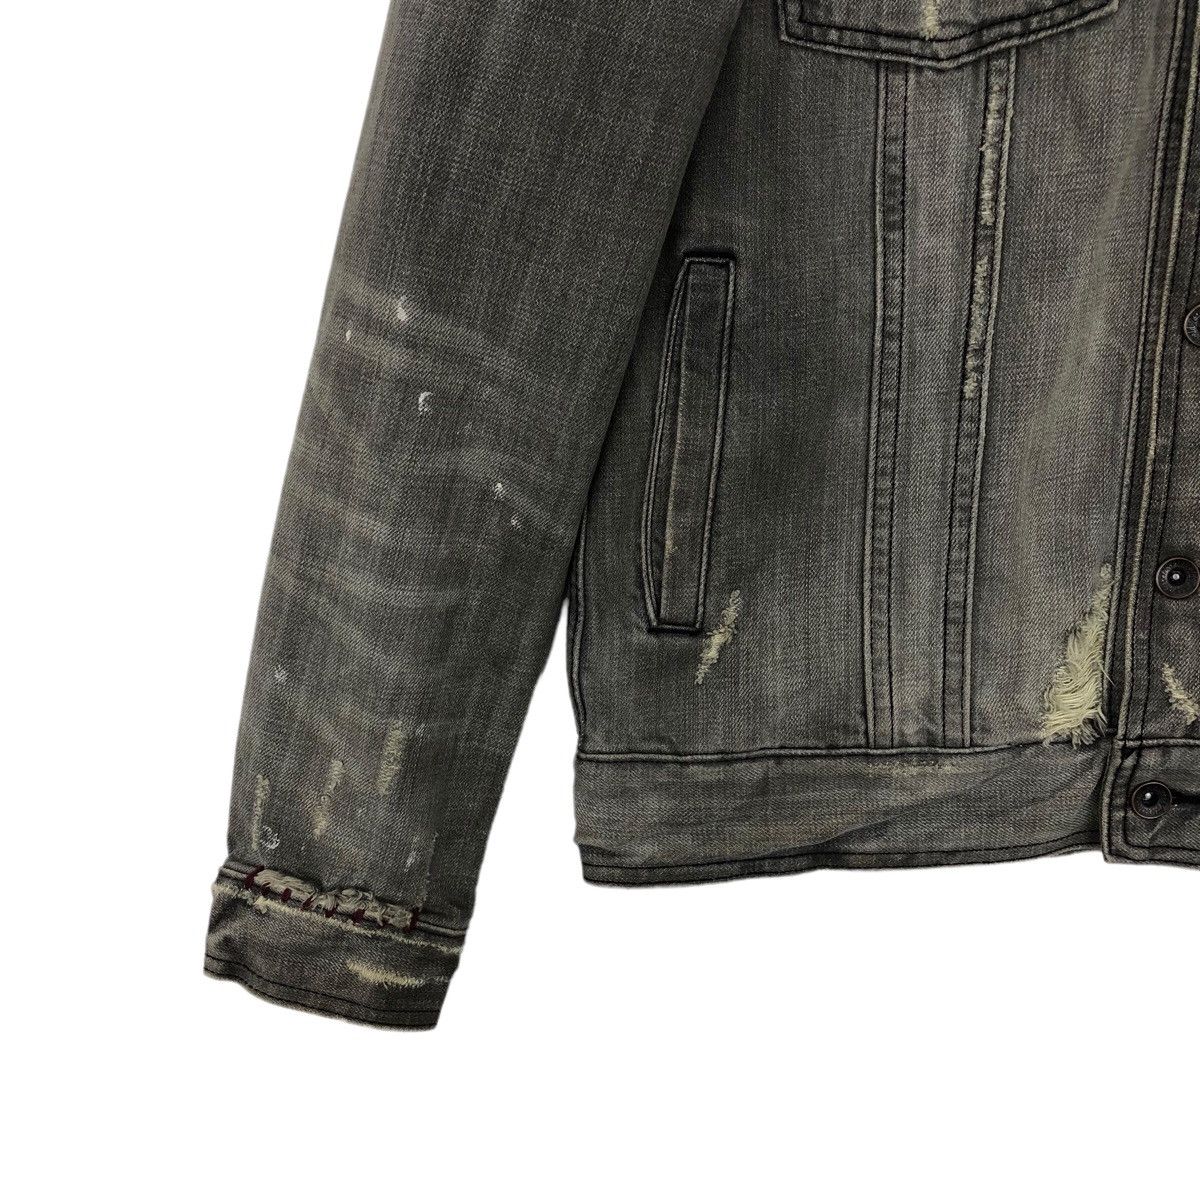 Vintage Vtg BEAMS Mineral Wash Distressed Denim Jacket Puffer Size US S / EU 44-46 / 1 - 11 Thumbnail